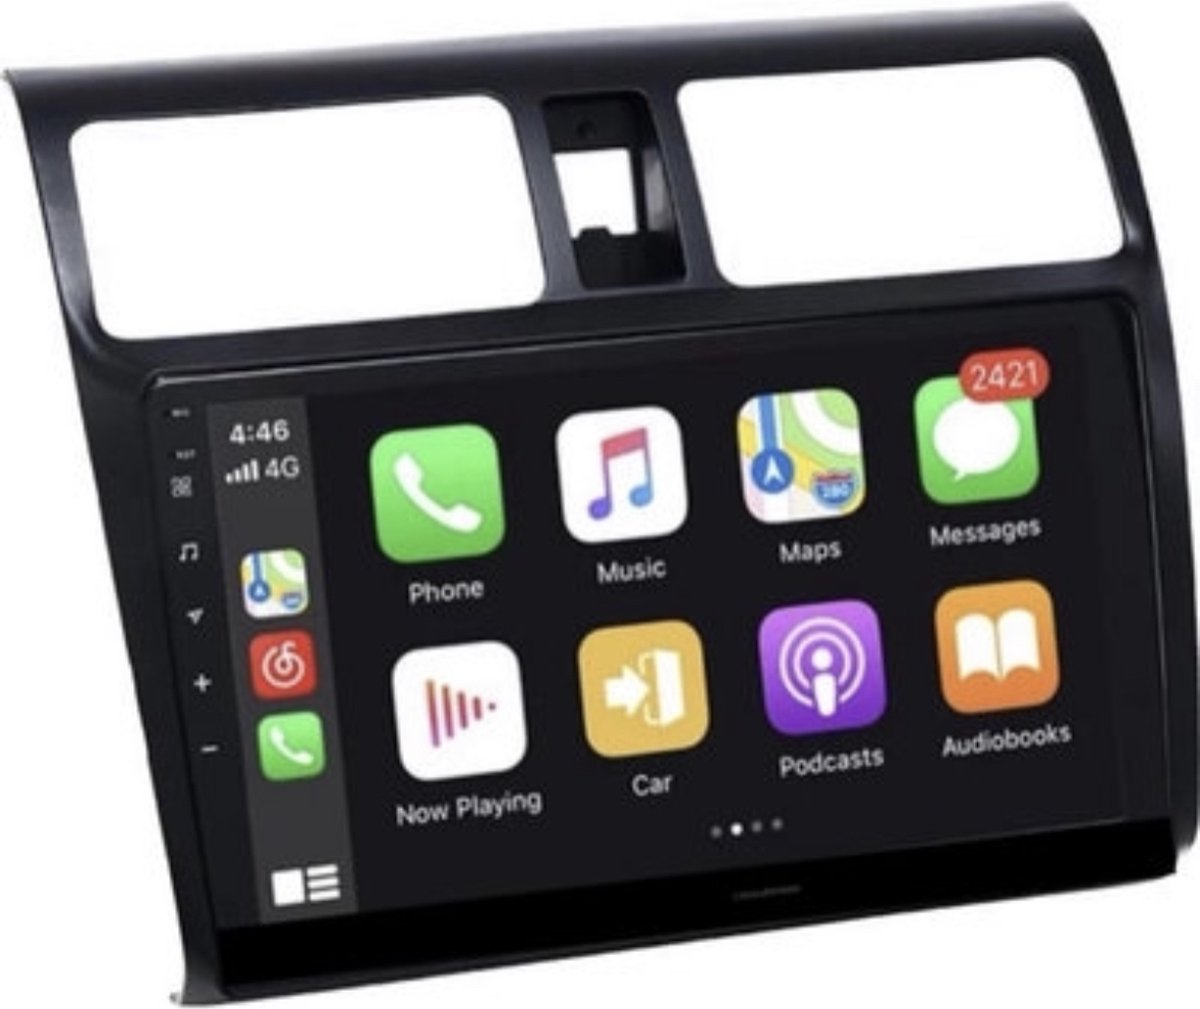 Autoradio voor Suzuki Swift 2G+32G Android 12 CarPlay/Auto/WiFi/GPS/RDS/DSP/NAV